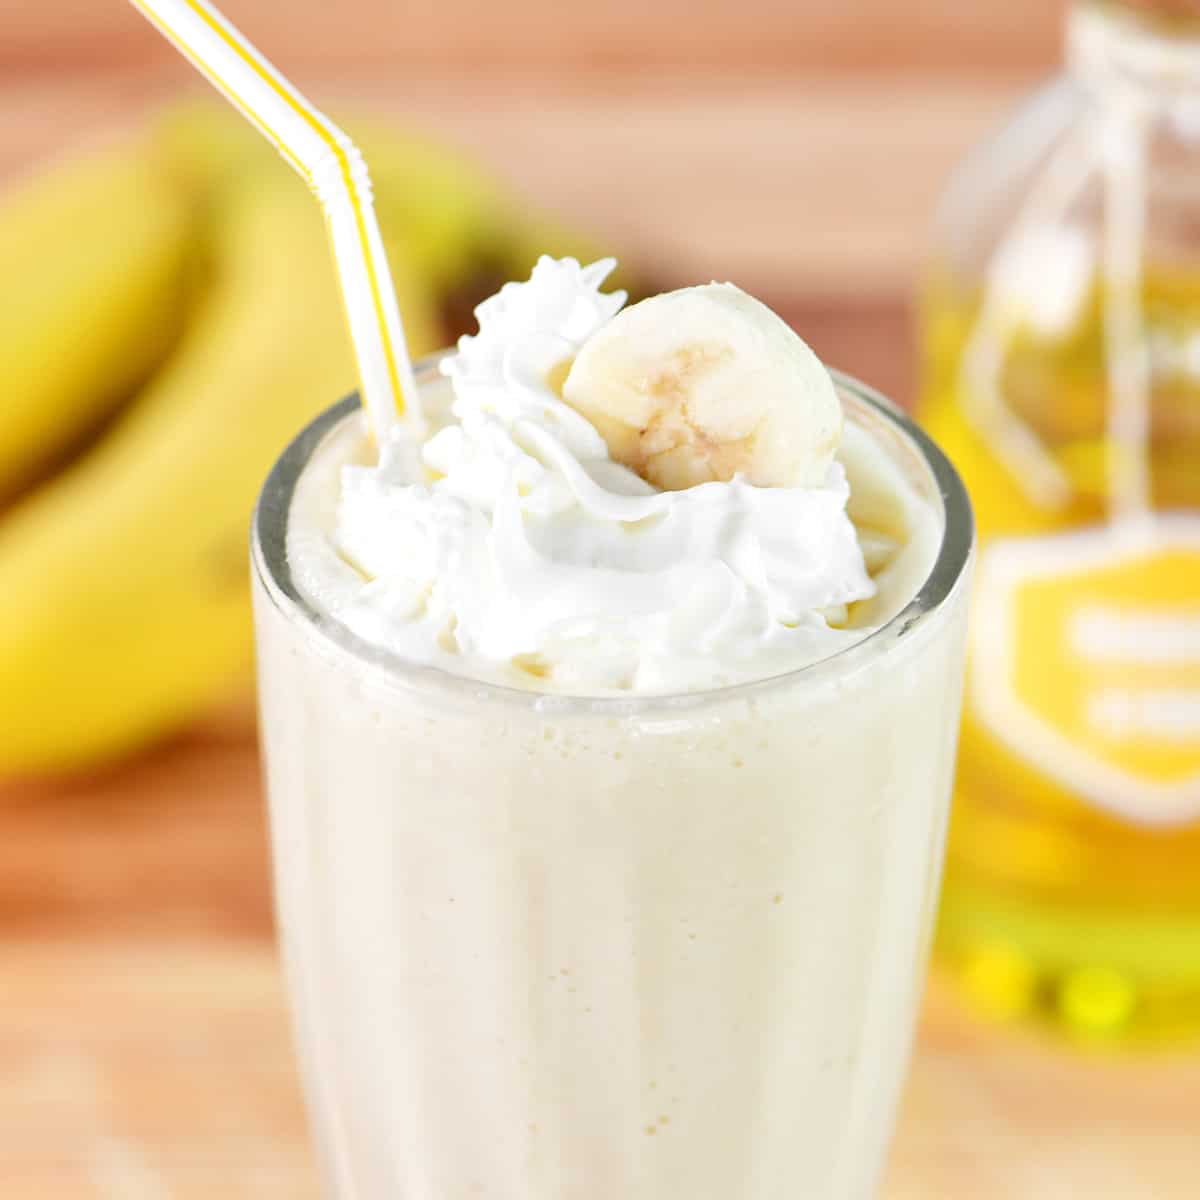 A banana milkshake with whipped cream on top.